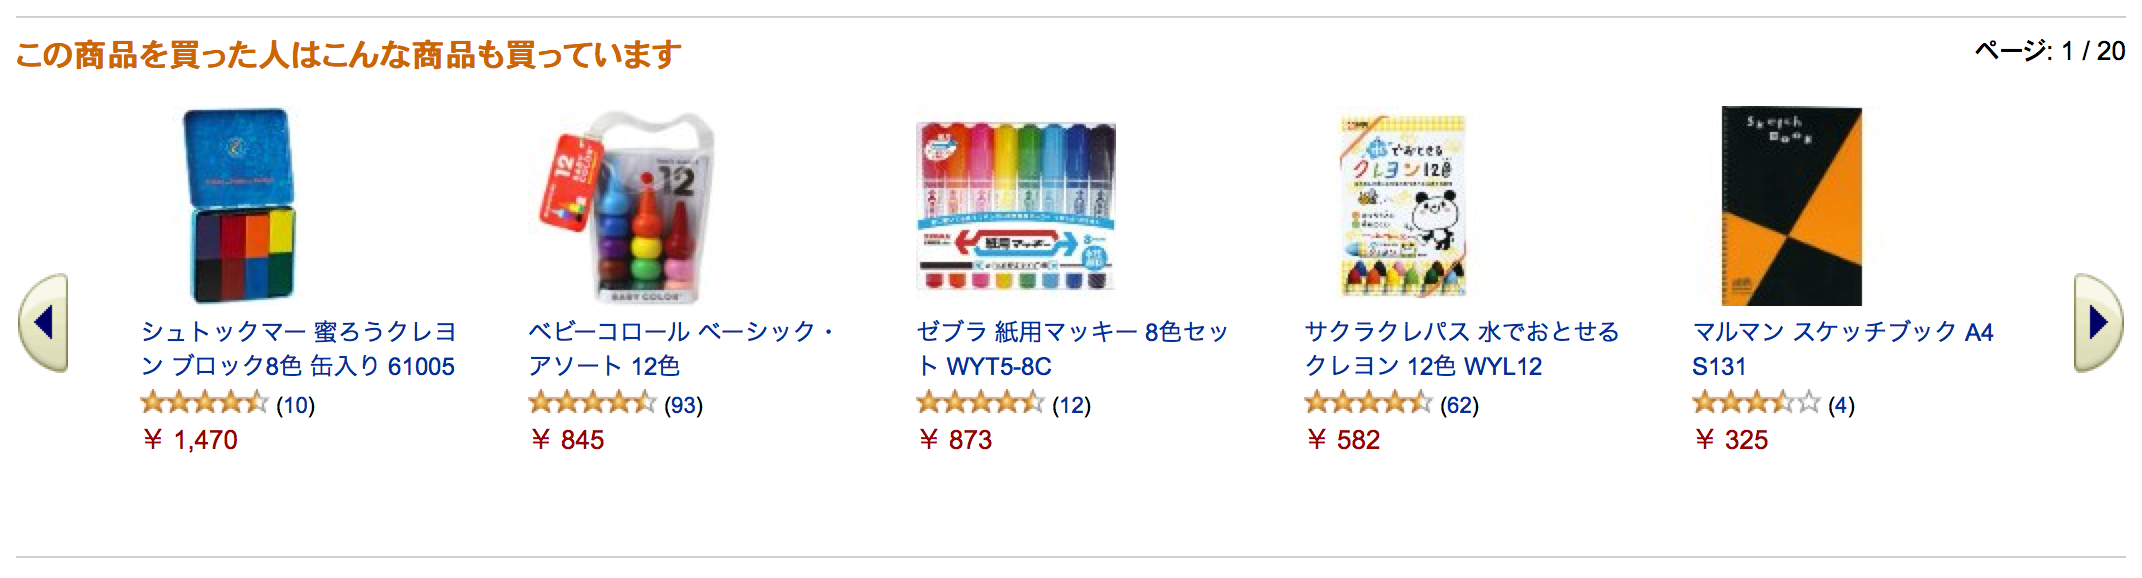 Amazon (amazon.co.jp) における「この商品を買った人はこんな商品も買っています」のカルーセル